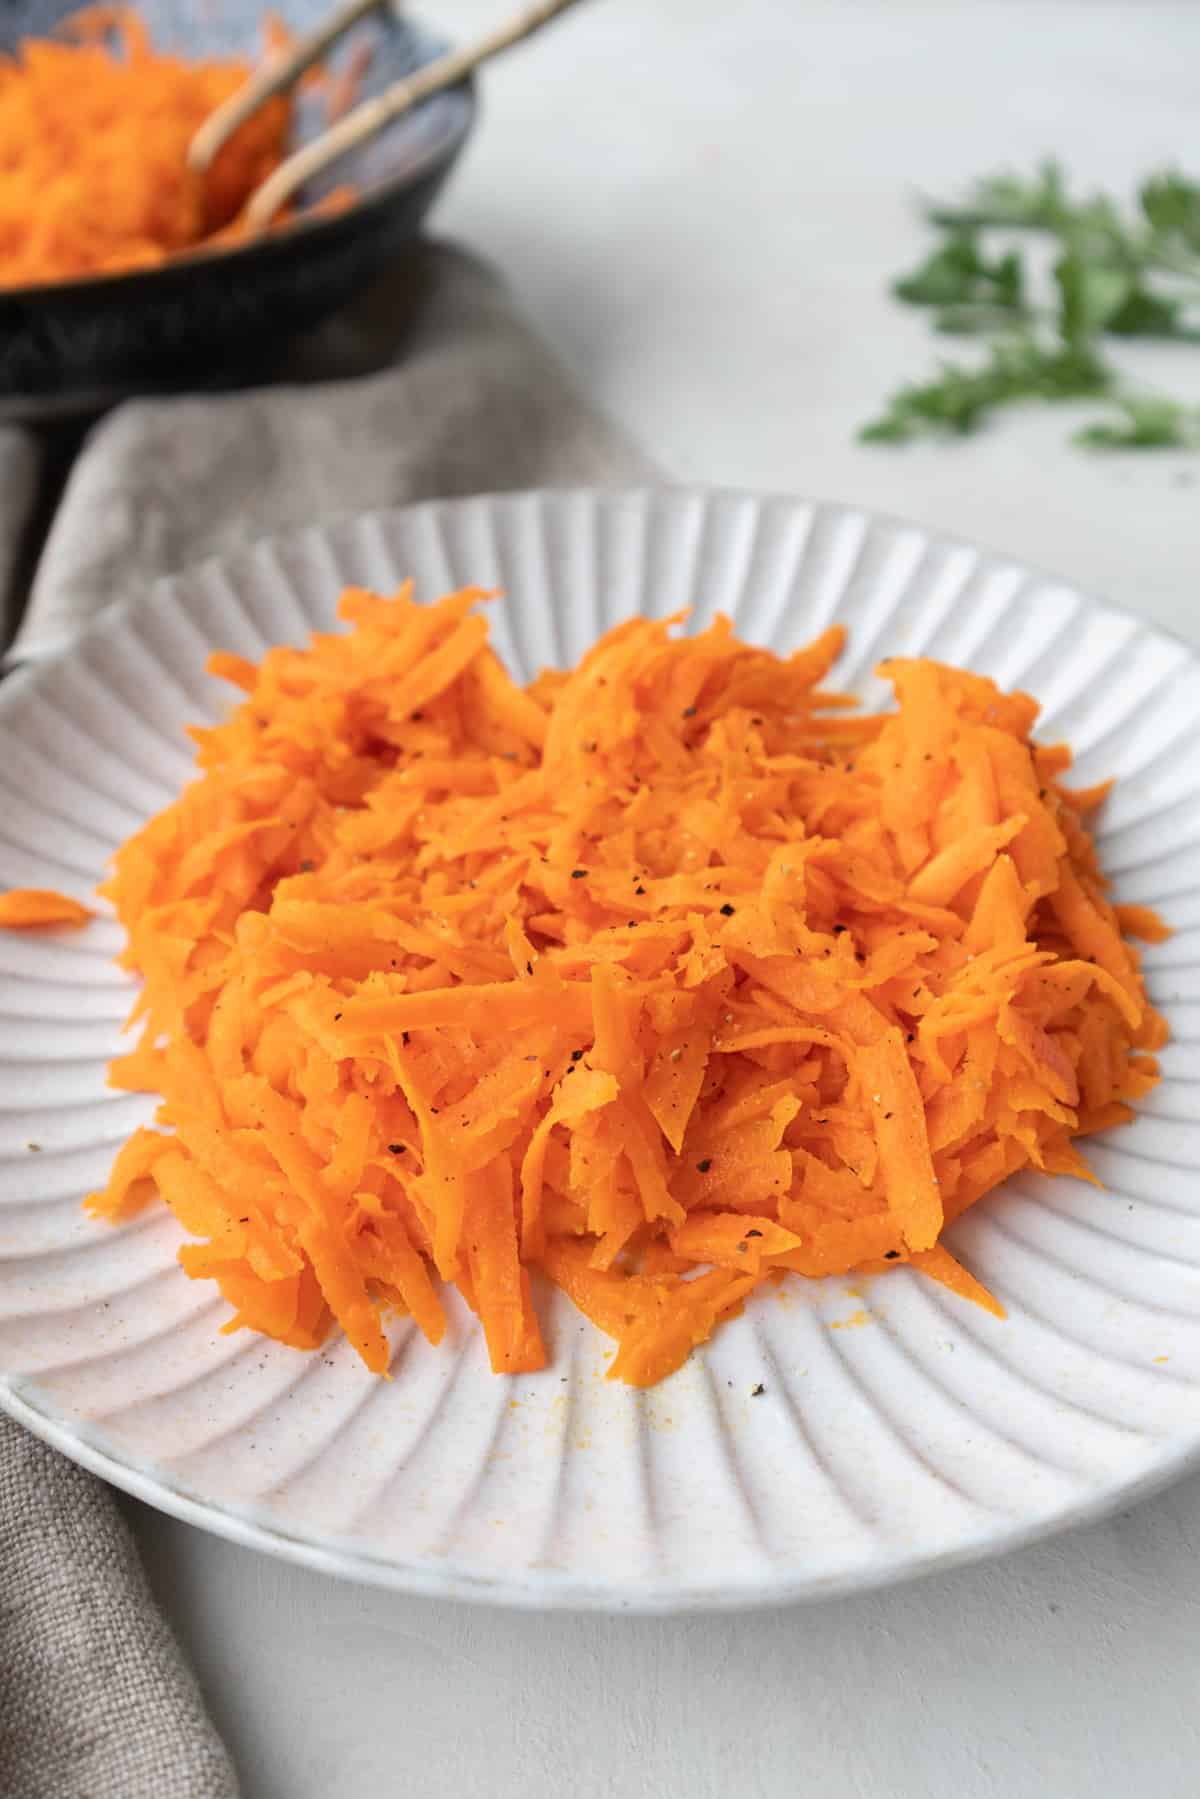 shredded carrots on a plate